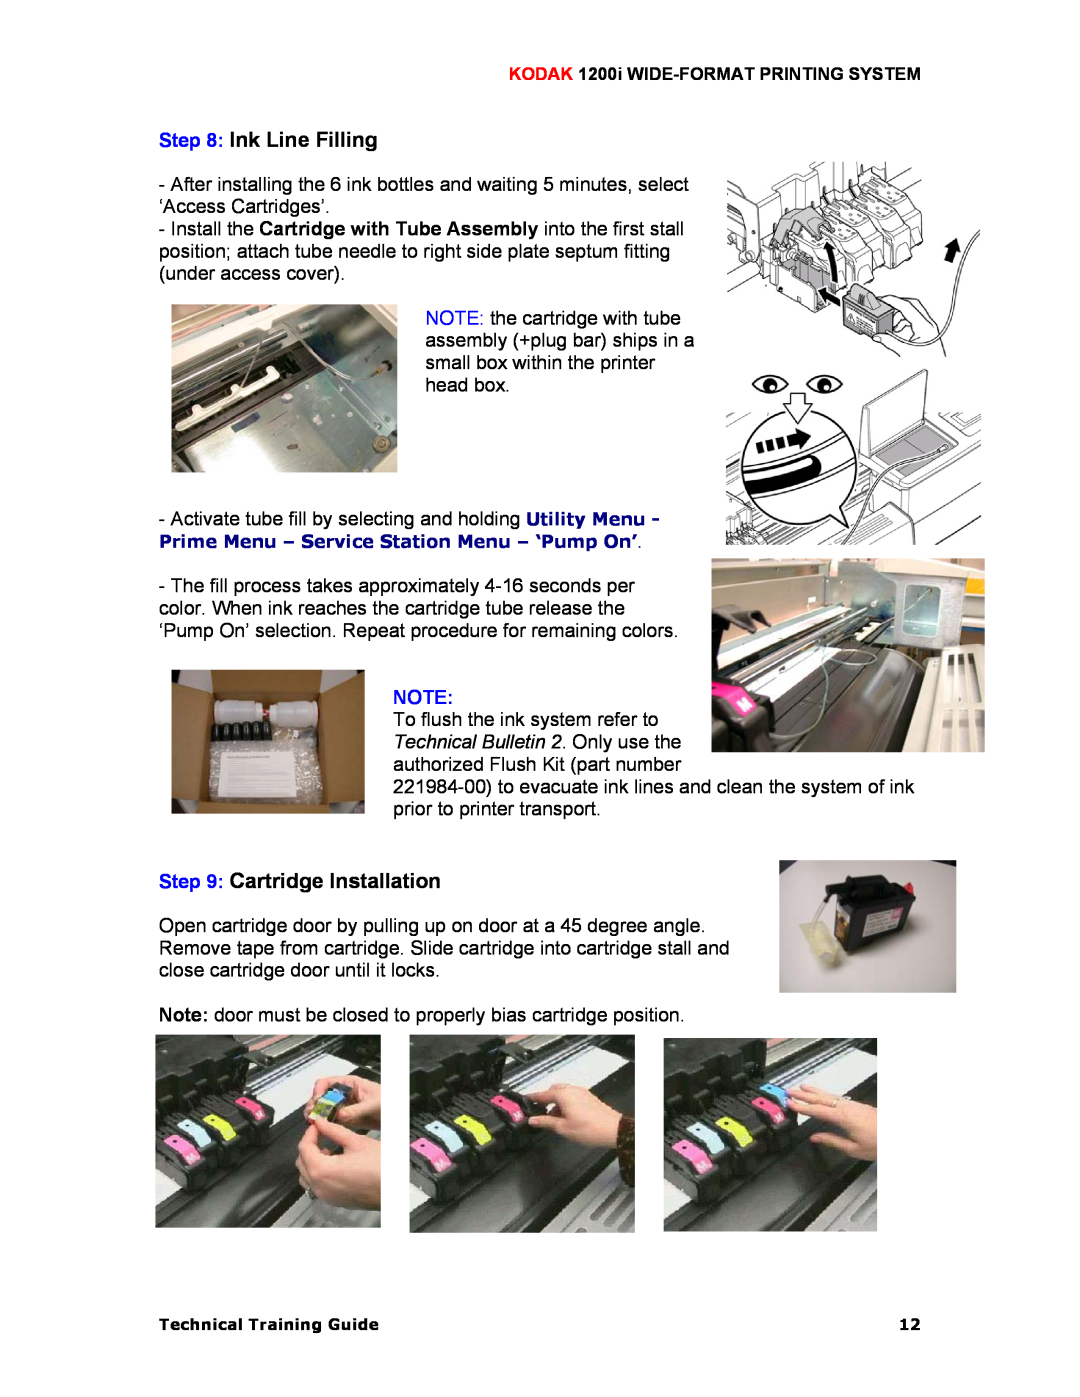 Kodak 1200I manual Ink Line Filling, Cartridge Installation, Technical Training Guide 